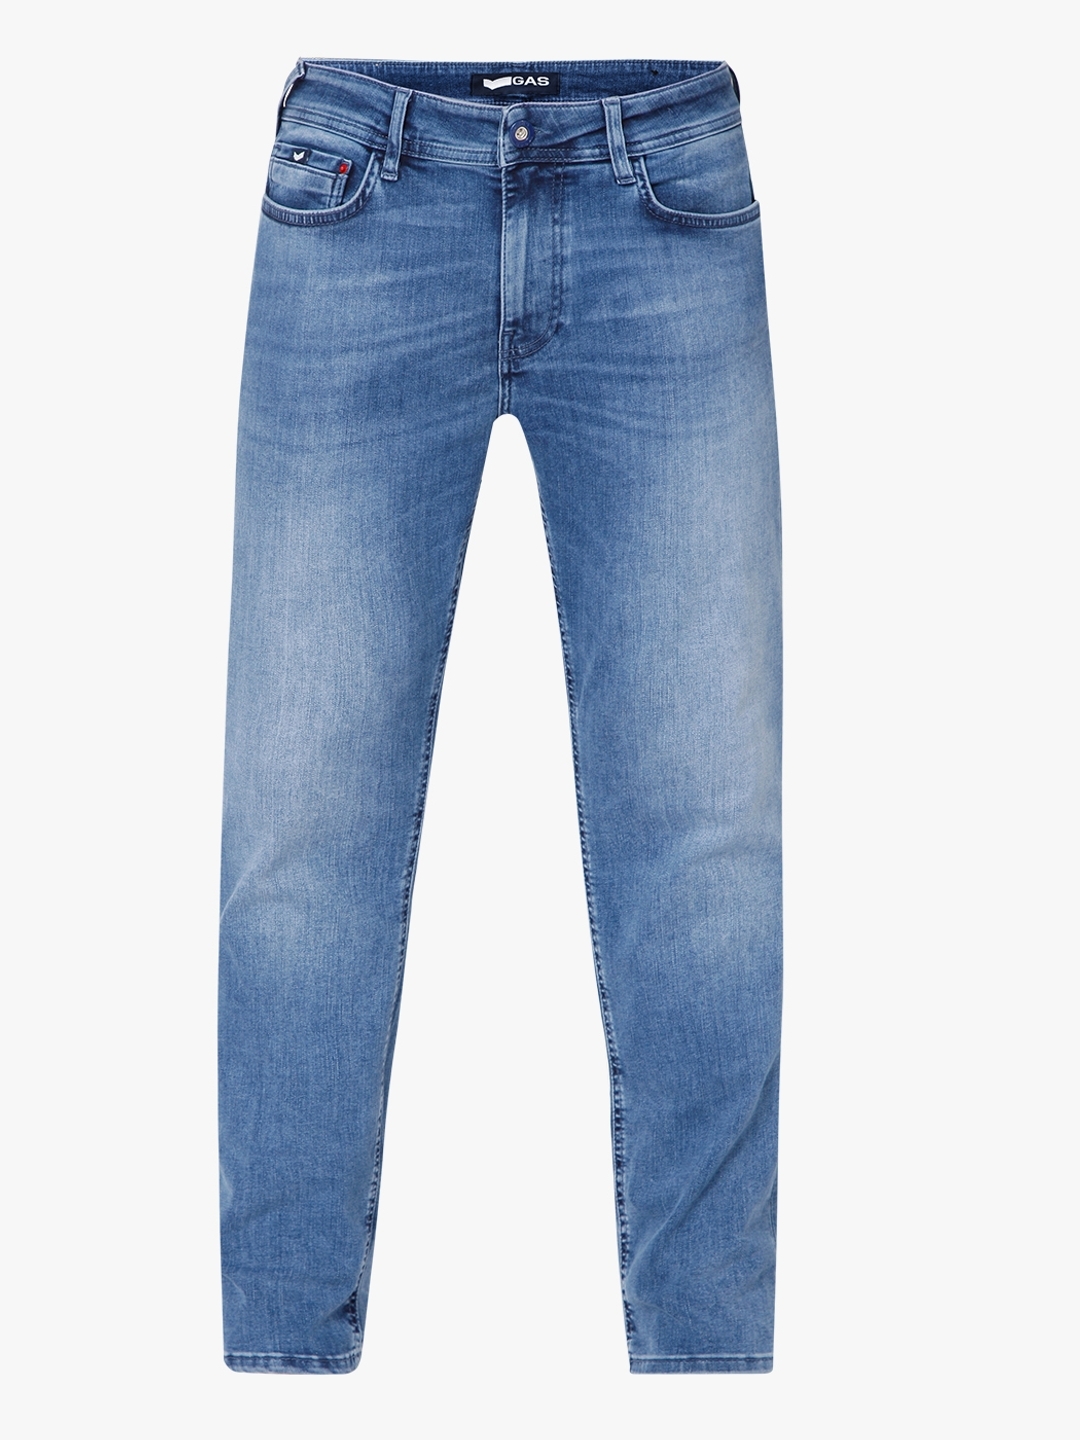 Men's Sax Zip Skinny Fit Jeans